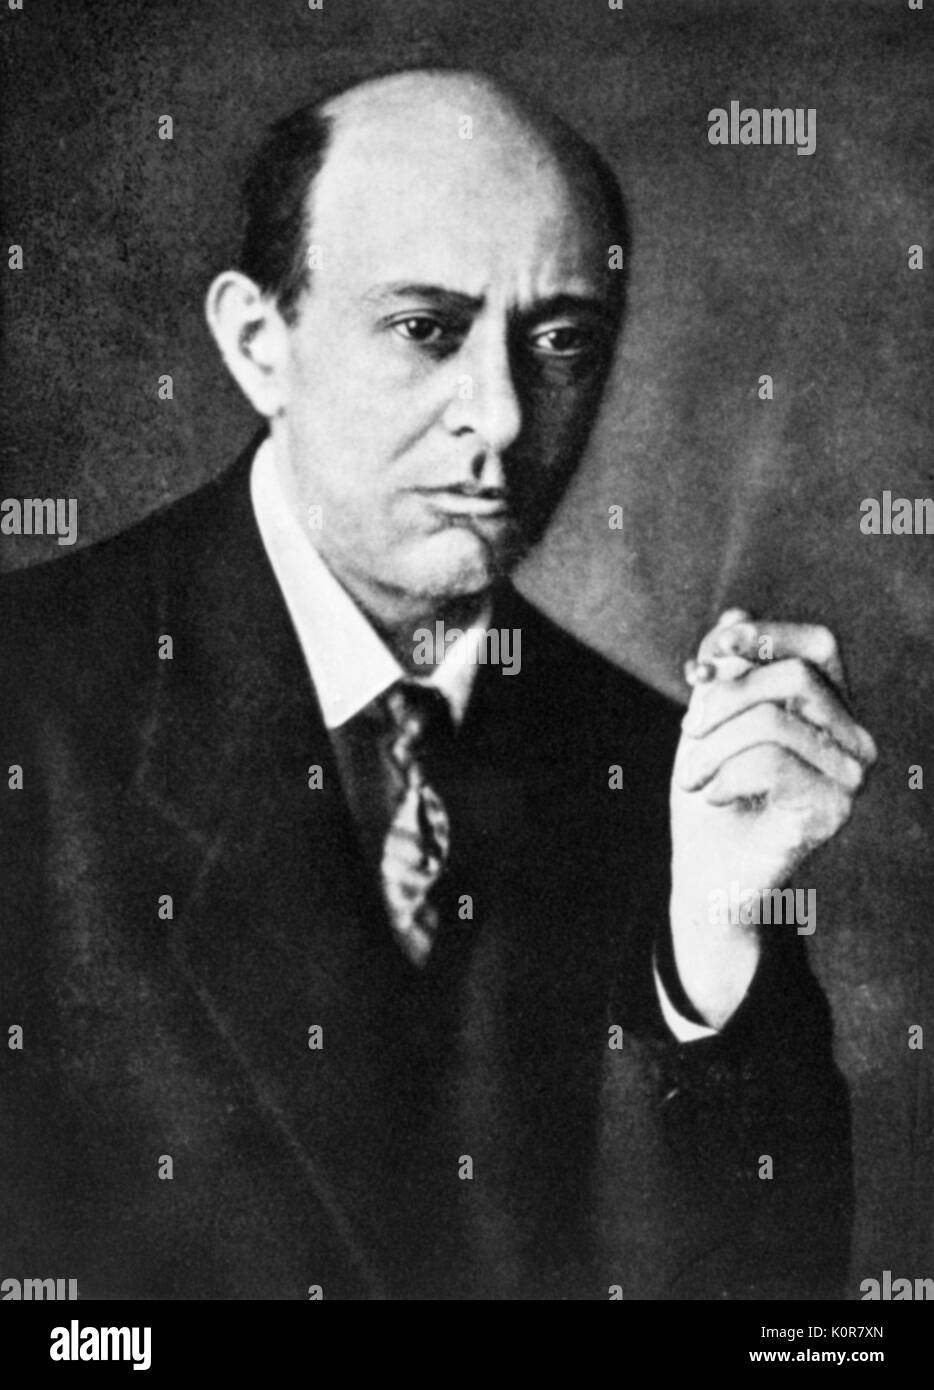 Arnold Schoenberg - portrait of Austrian composer. 13 April 1874 - 13 July 1951. Smoking cigarette. Stock Photo